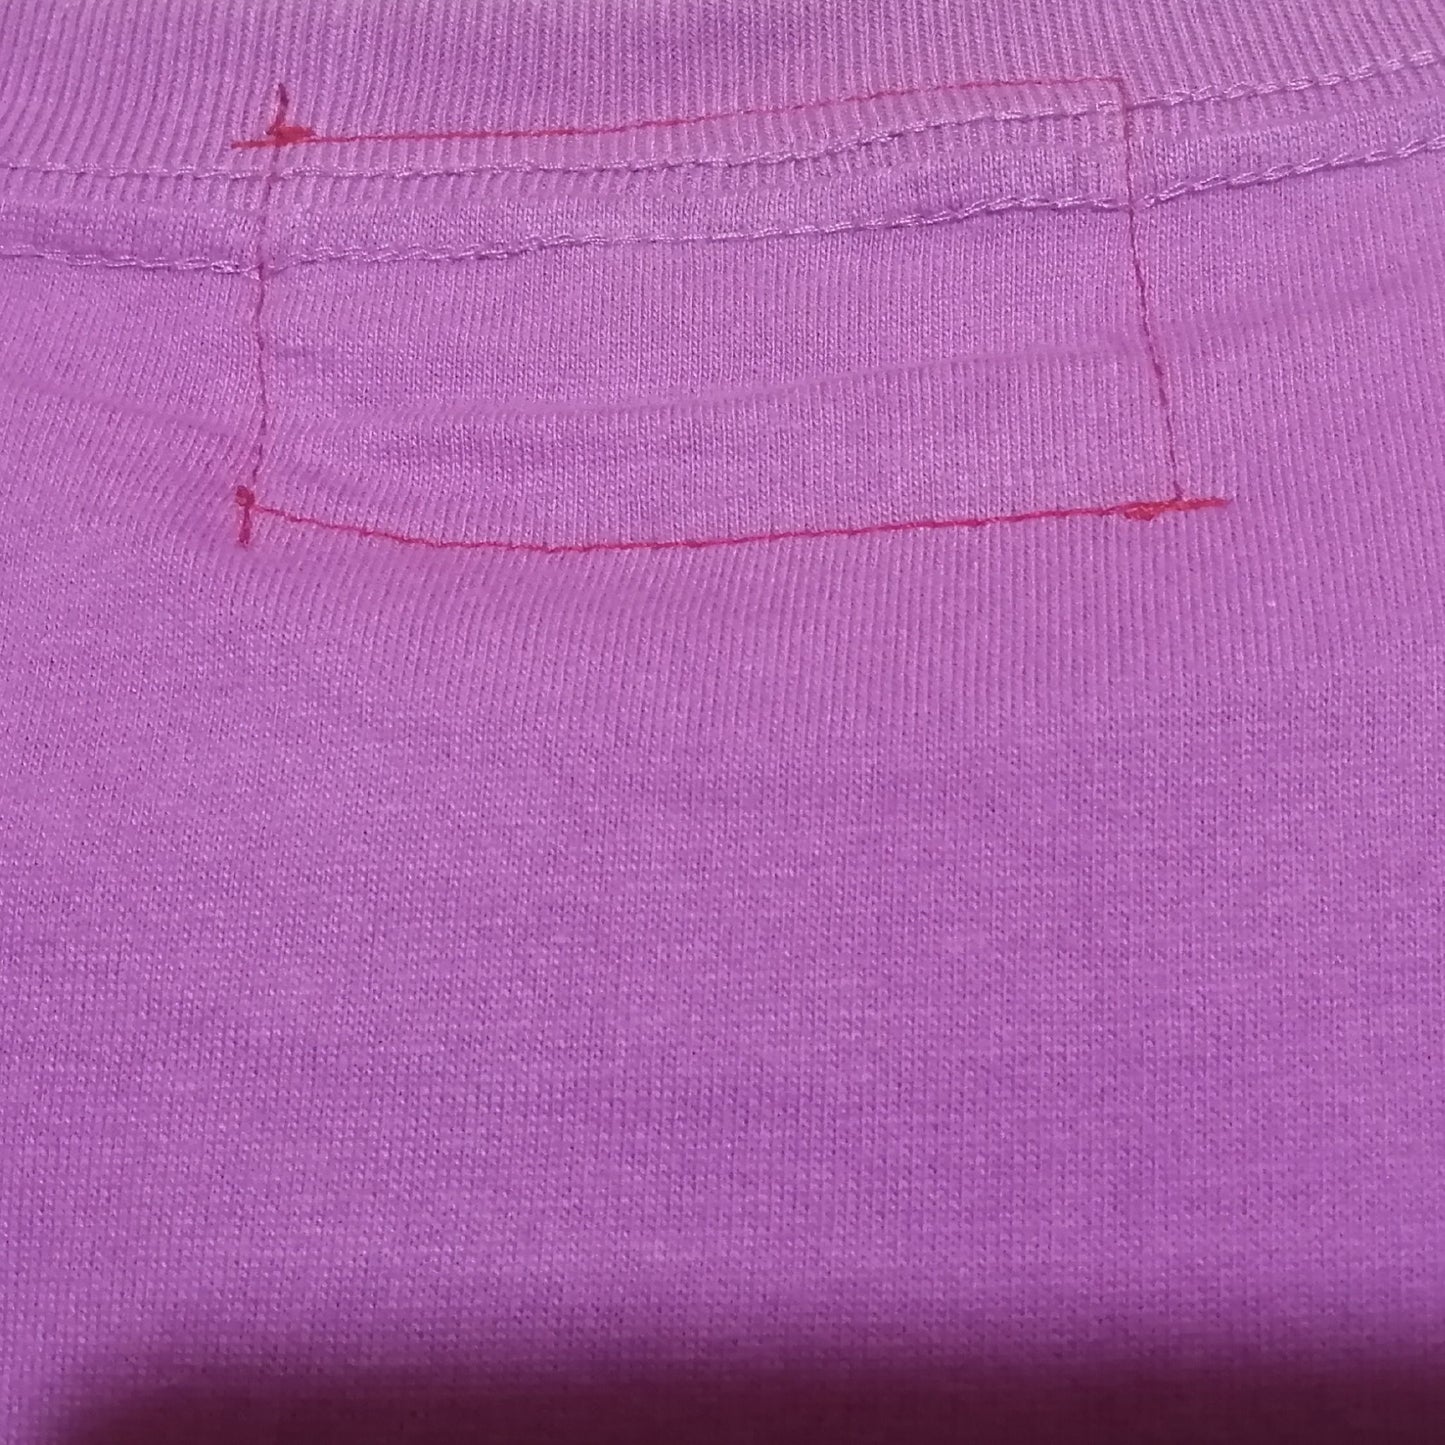 White Lace Ribbon x  Cross paint  Light Purple T-shirt　